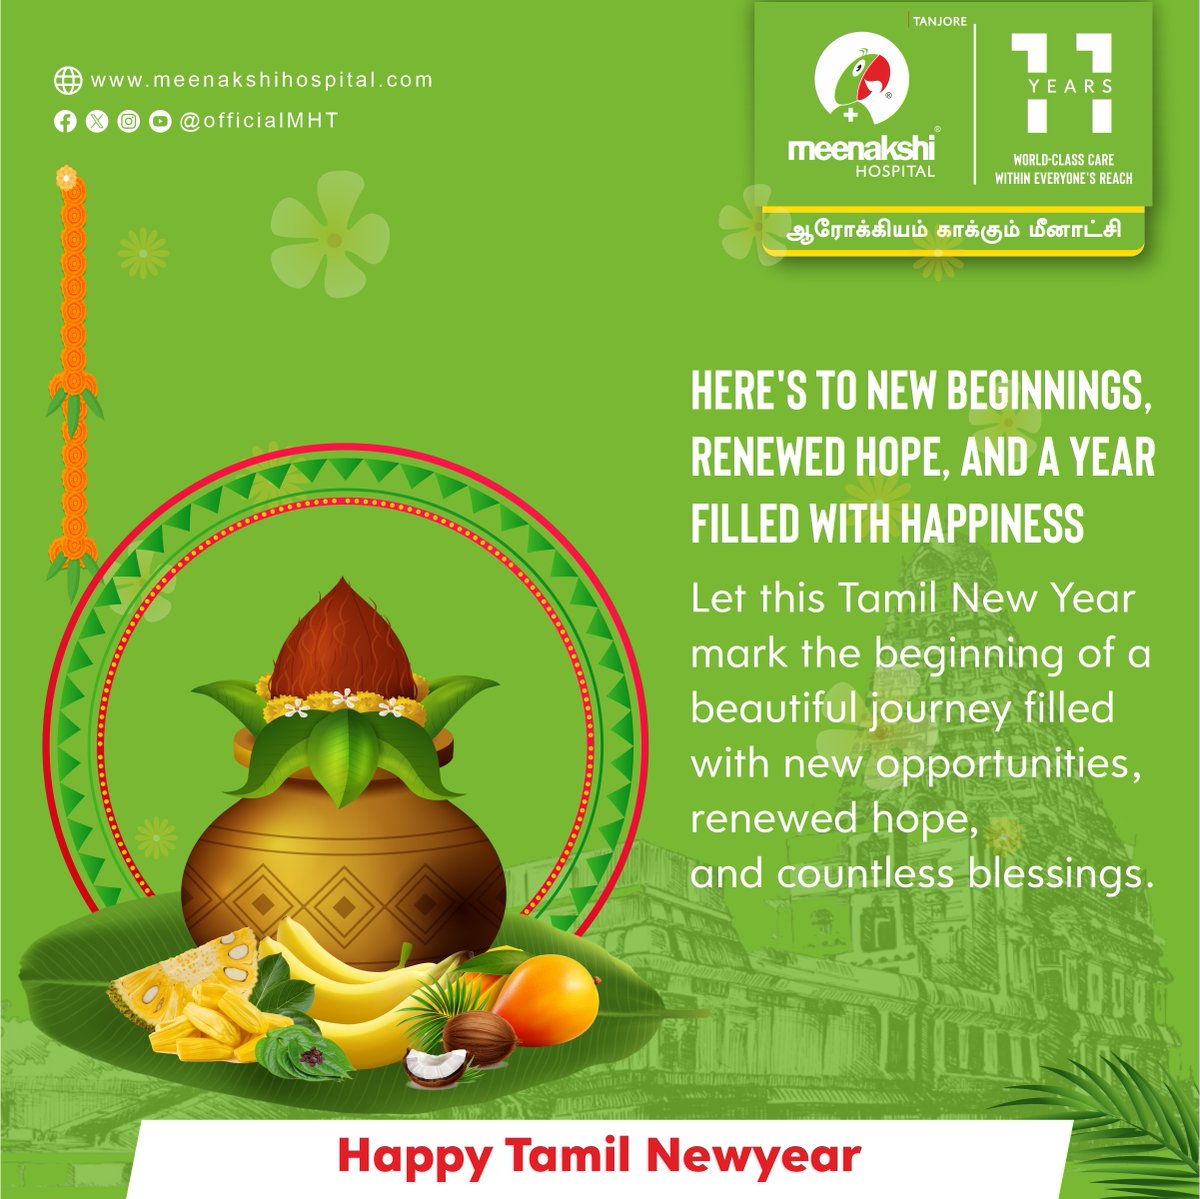 Tanjore Meenakshi Hospital wishes you a Happy Tamil New Year!

#HappyTamilNewYear #TamilNewYear #Puthandu #NewYearWishes #CelebrateTamilNewYear #TamilCulture #FestiveWishes #TamilTraditions #MeenakshiHospitalThanjavur #MHT #ArokiyamKaakumMeenakshi #Thanjavur